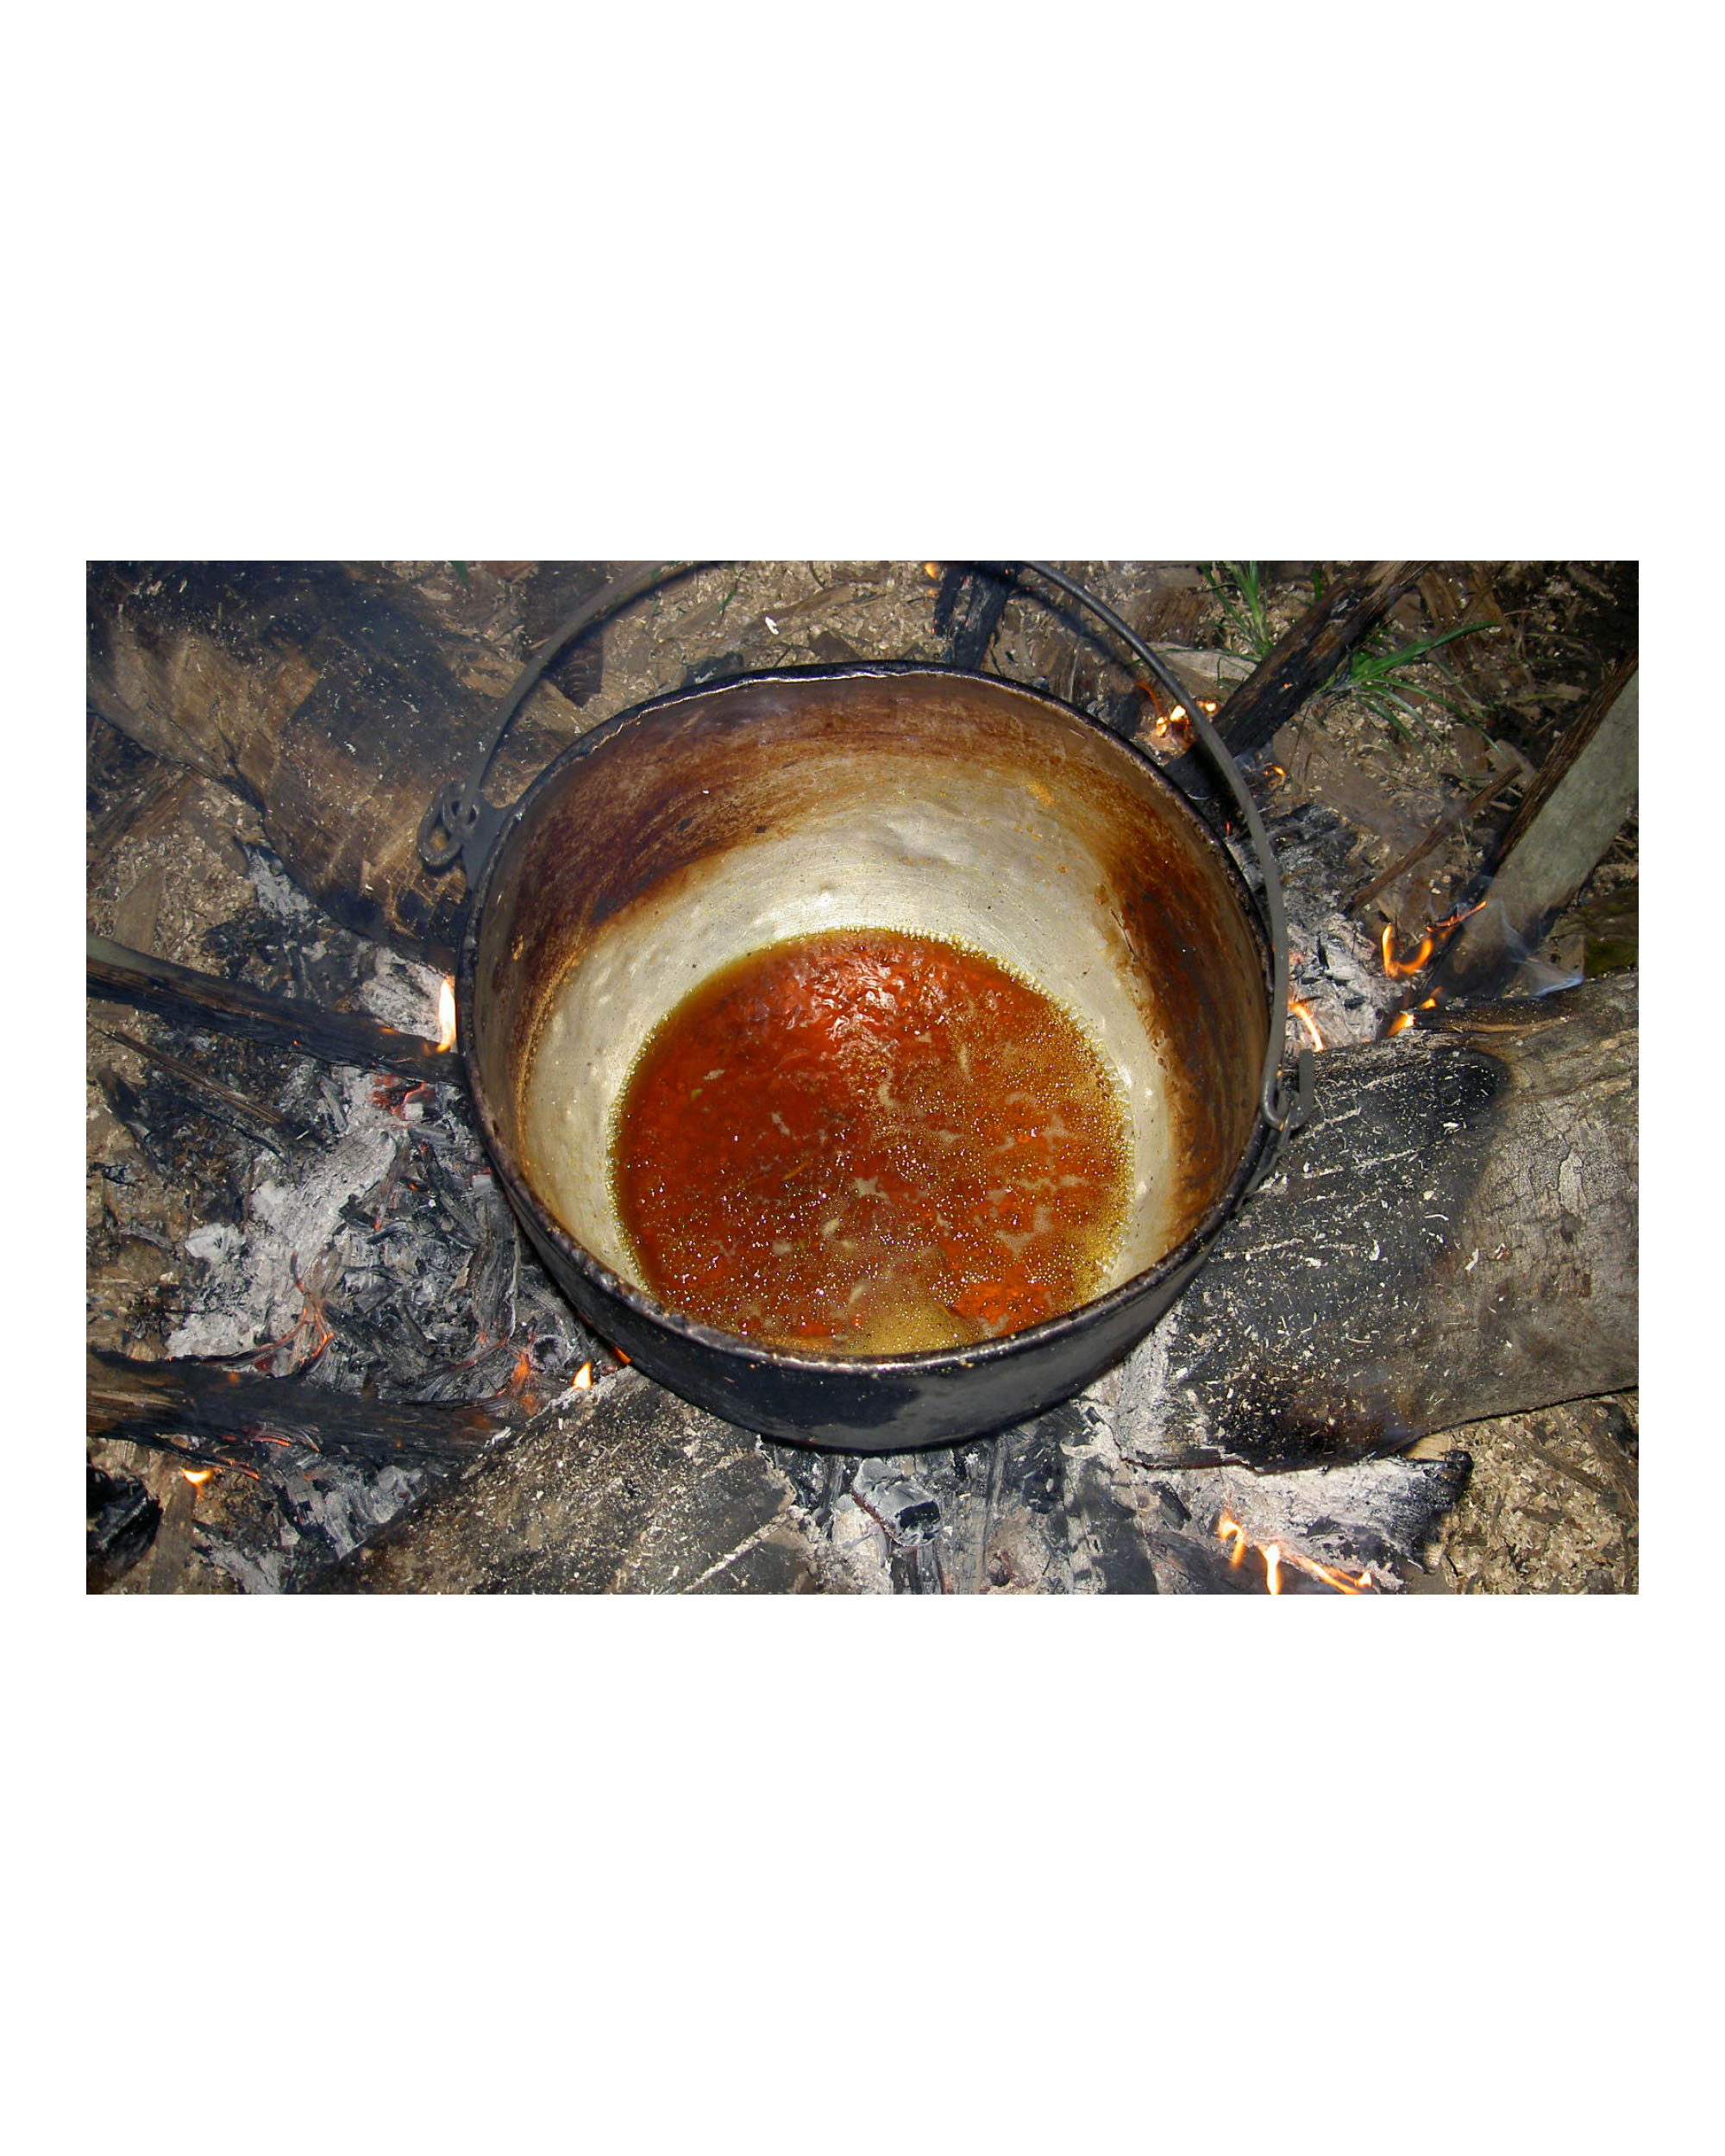 Brewing Ayahuasca - made from the caapi vine and the chacruna shrub.